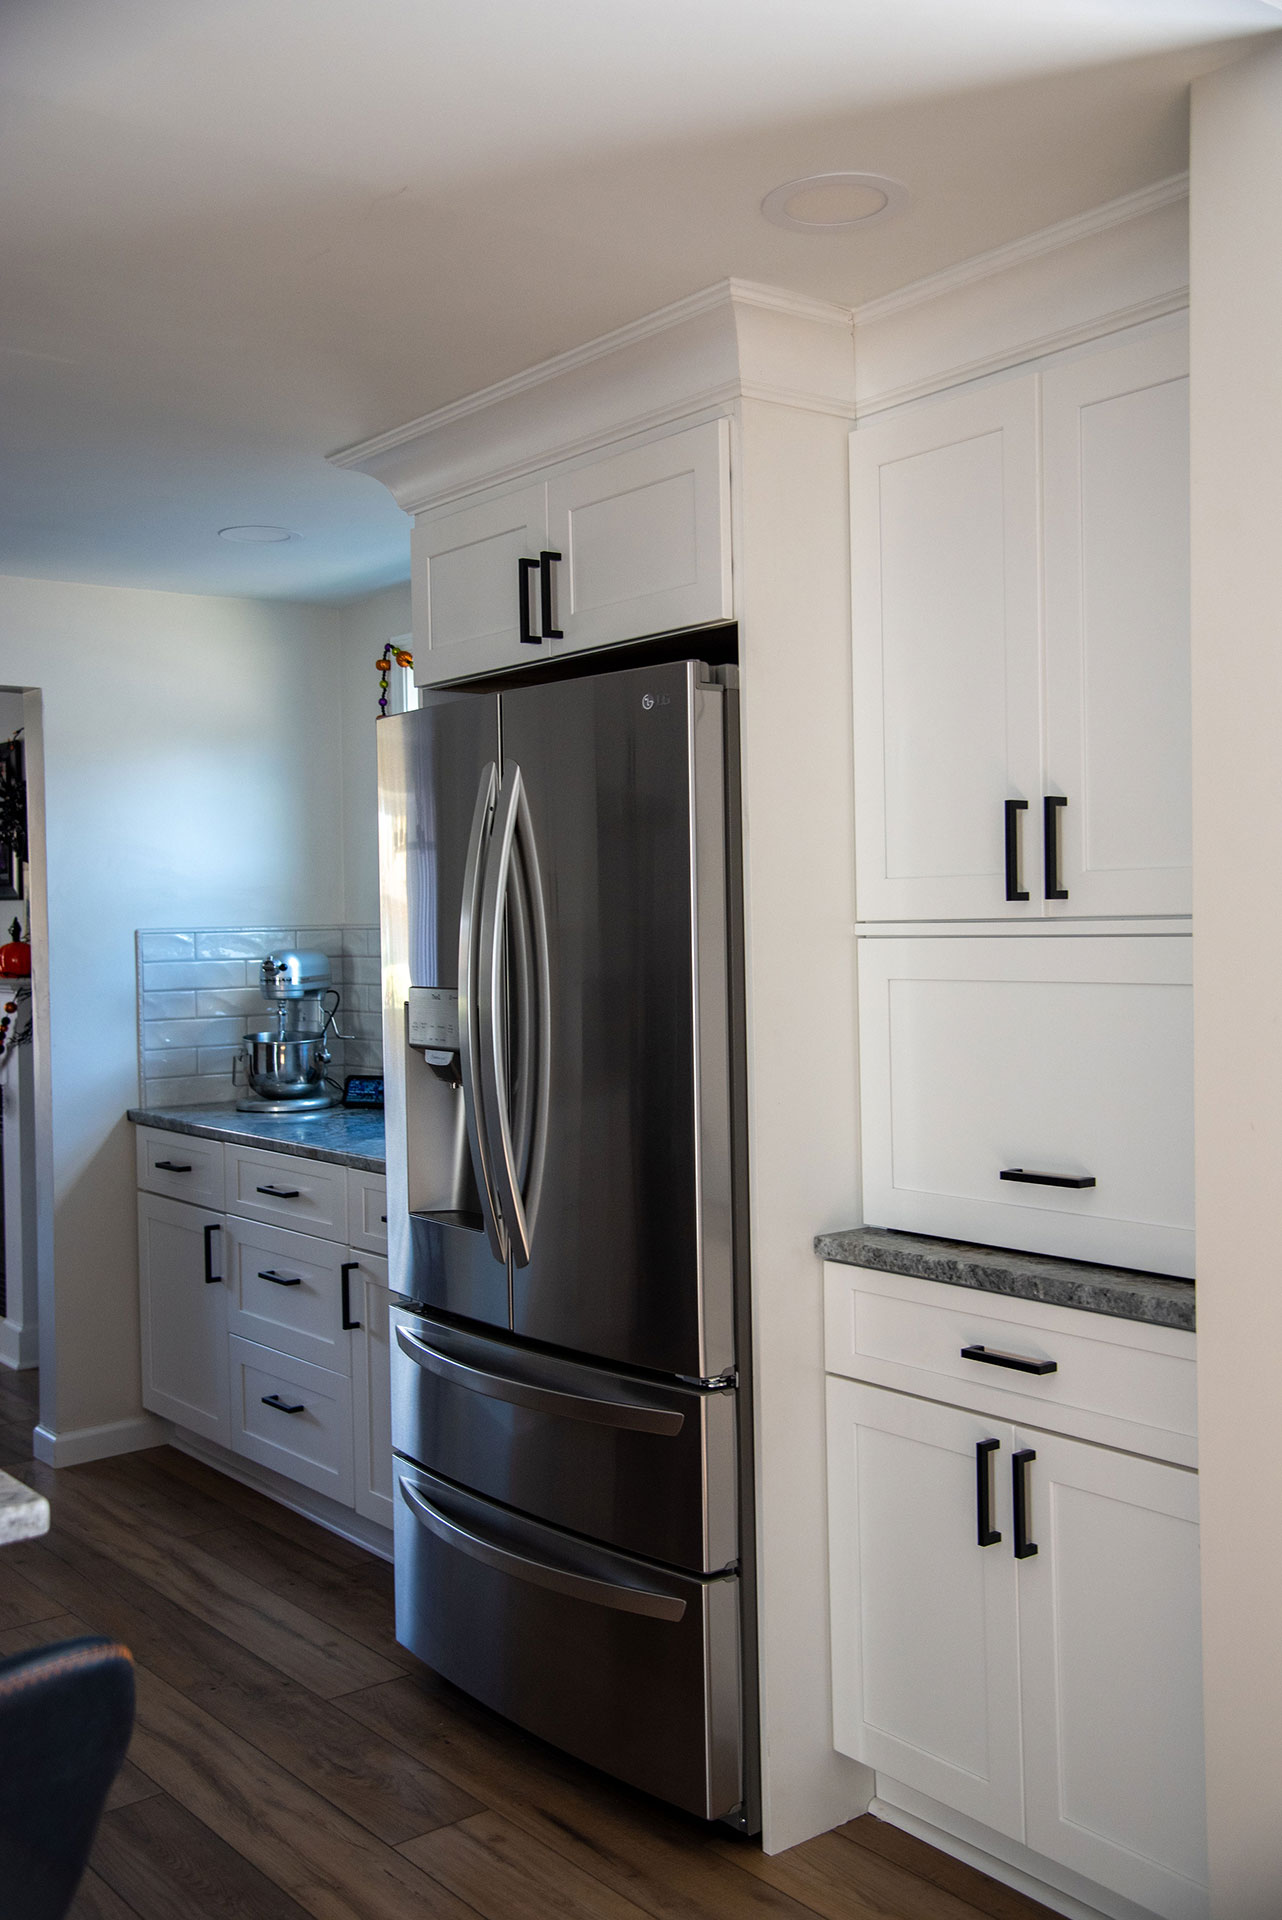 kitchen remodel of new cabinets tile fridge